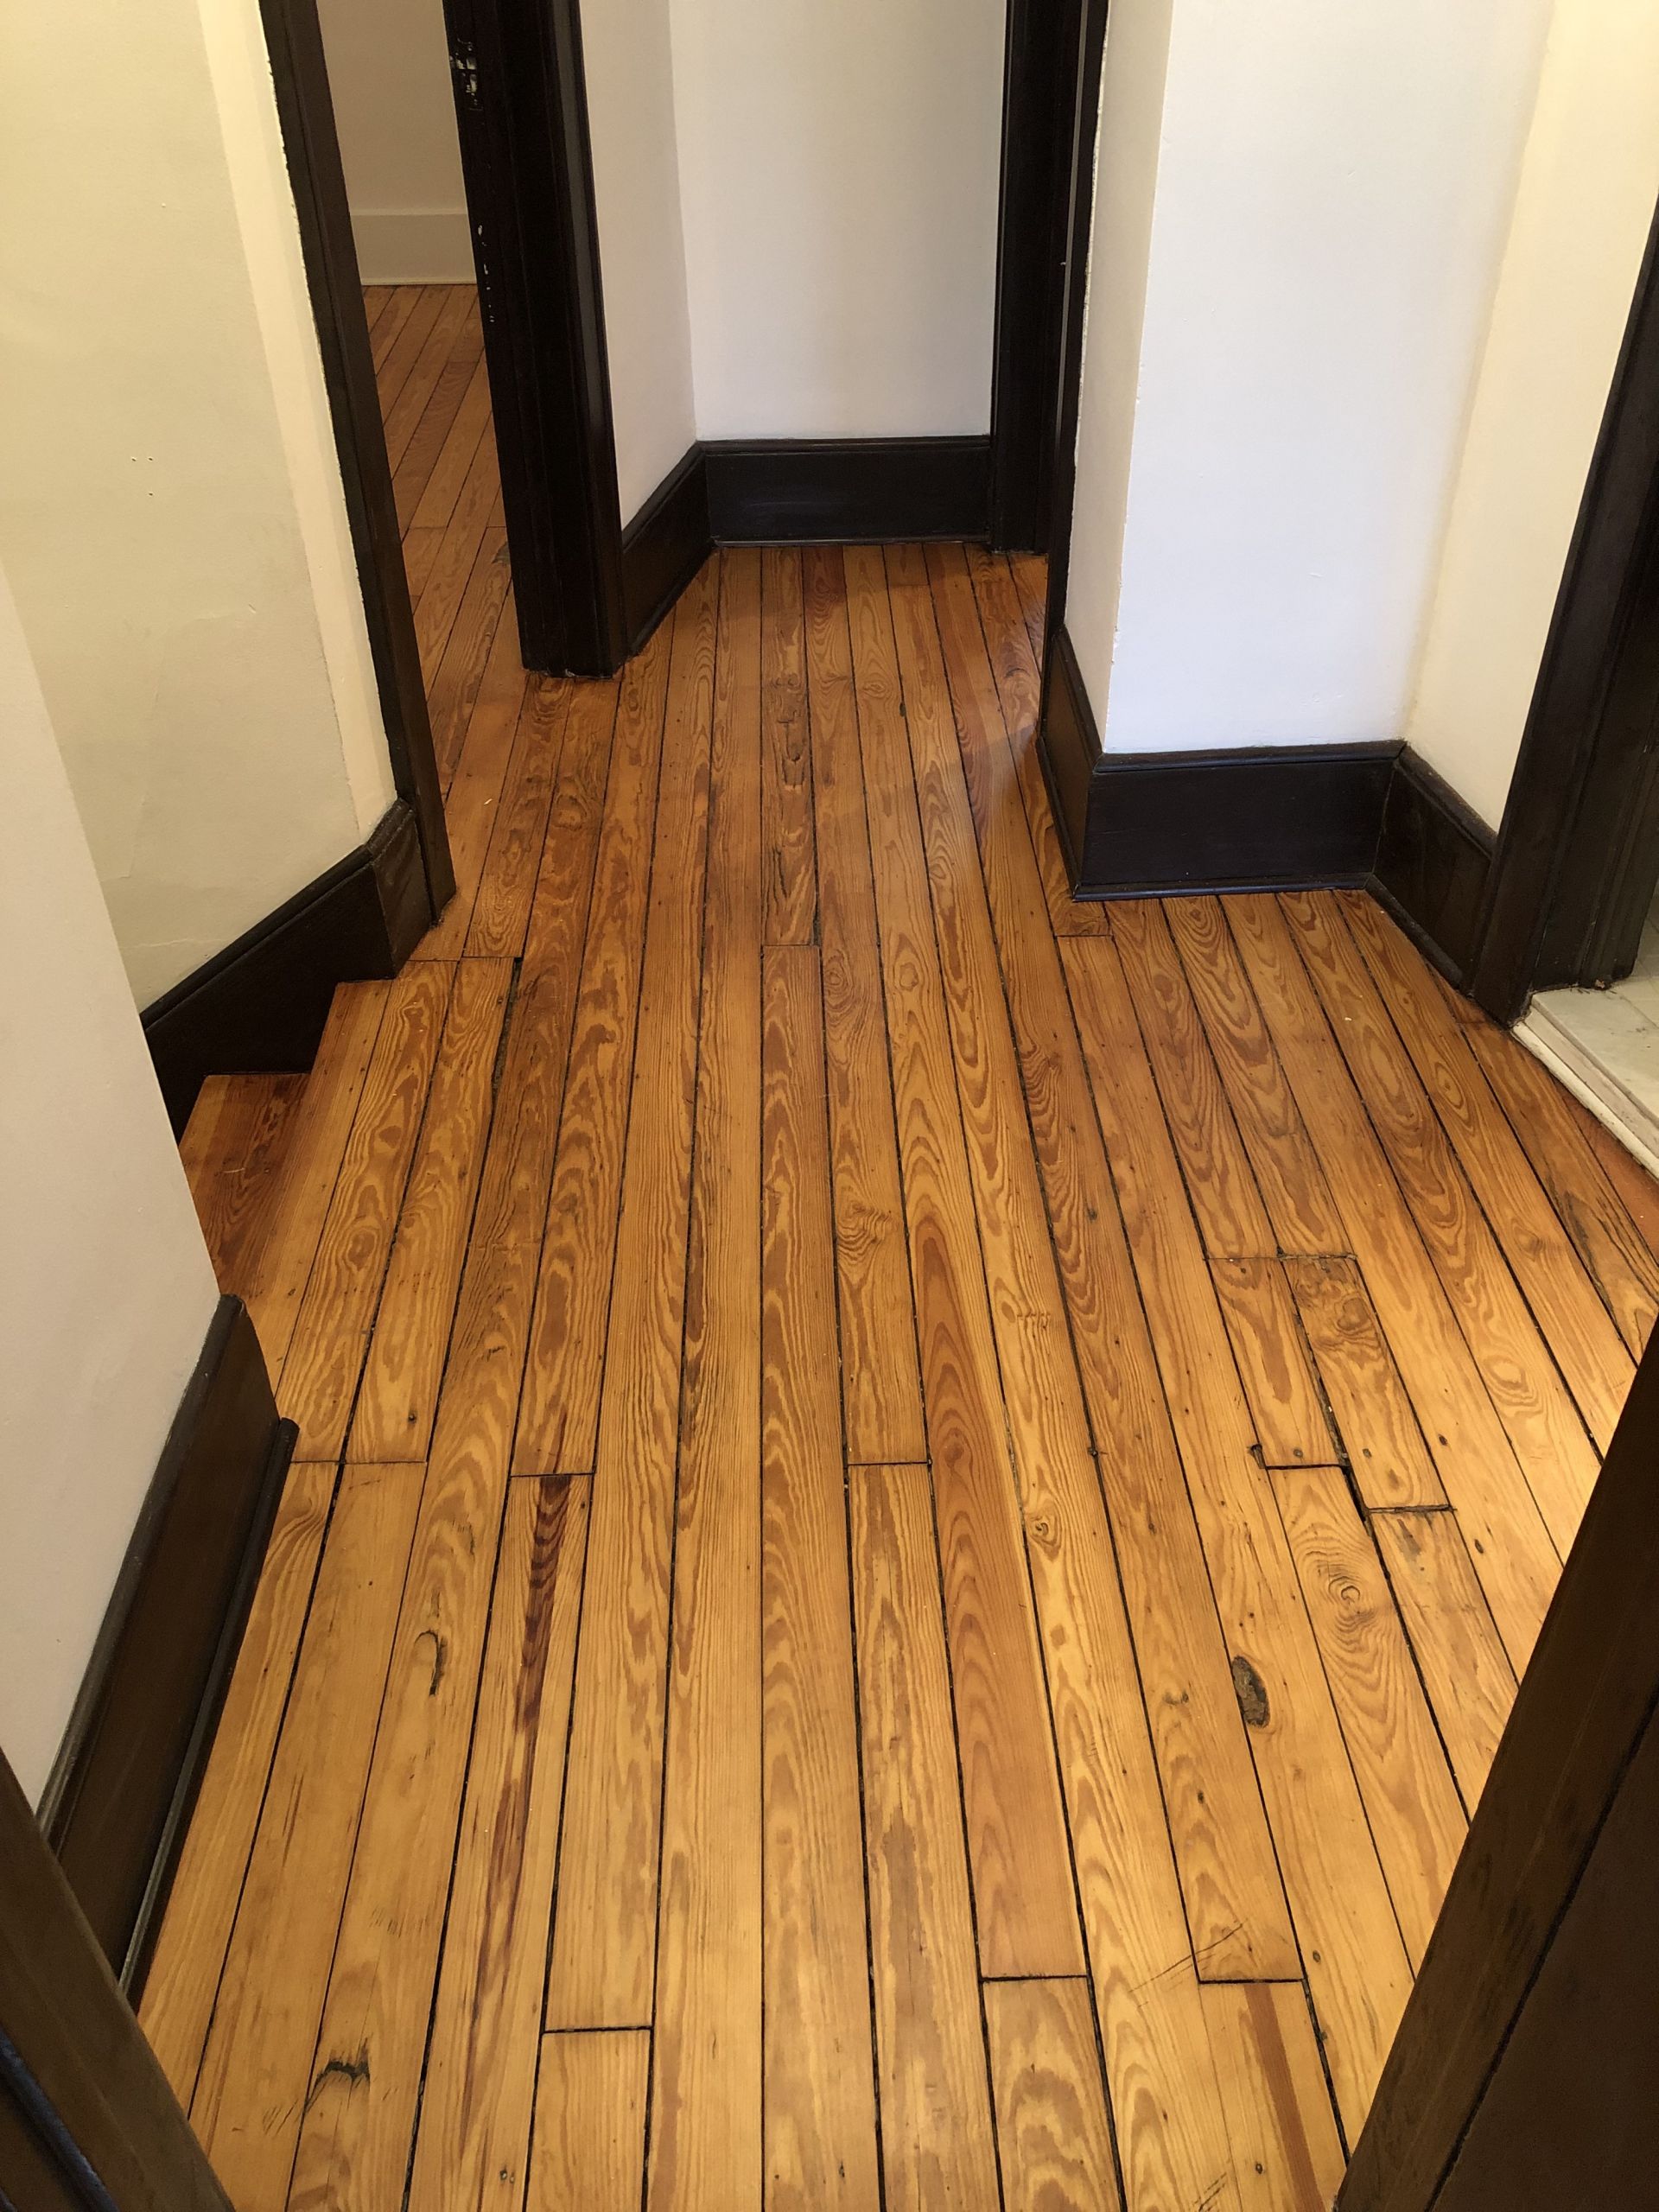 DIY Refinish Hardwood Floors
 HOW TO REFINISH HARDWOOD FLOORS Step by Step Do It